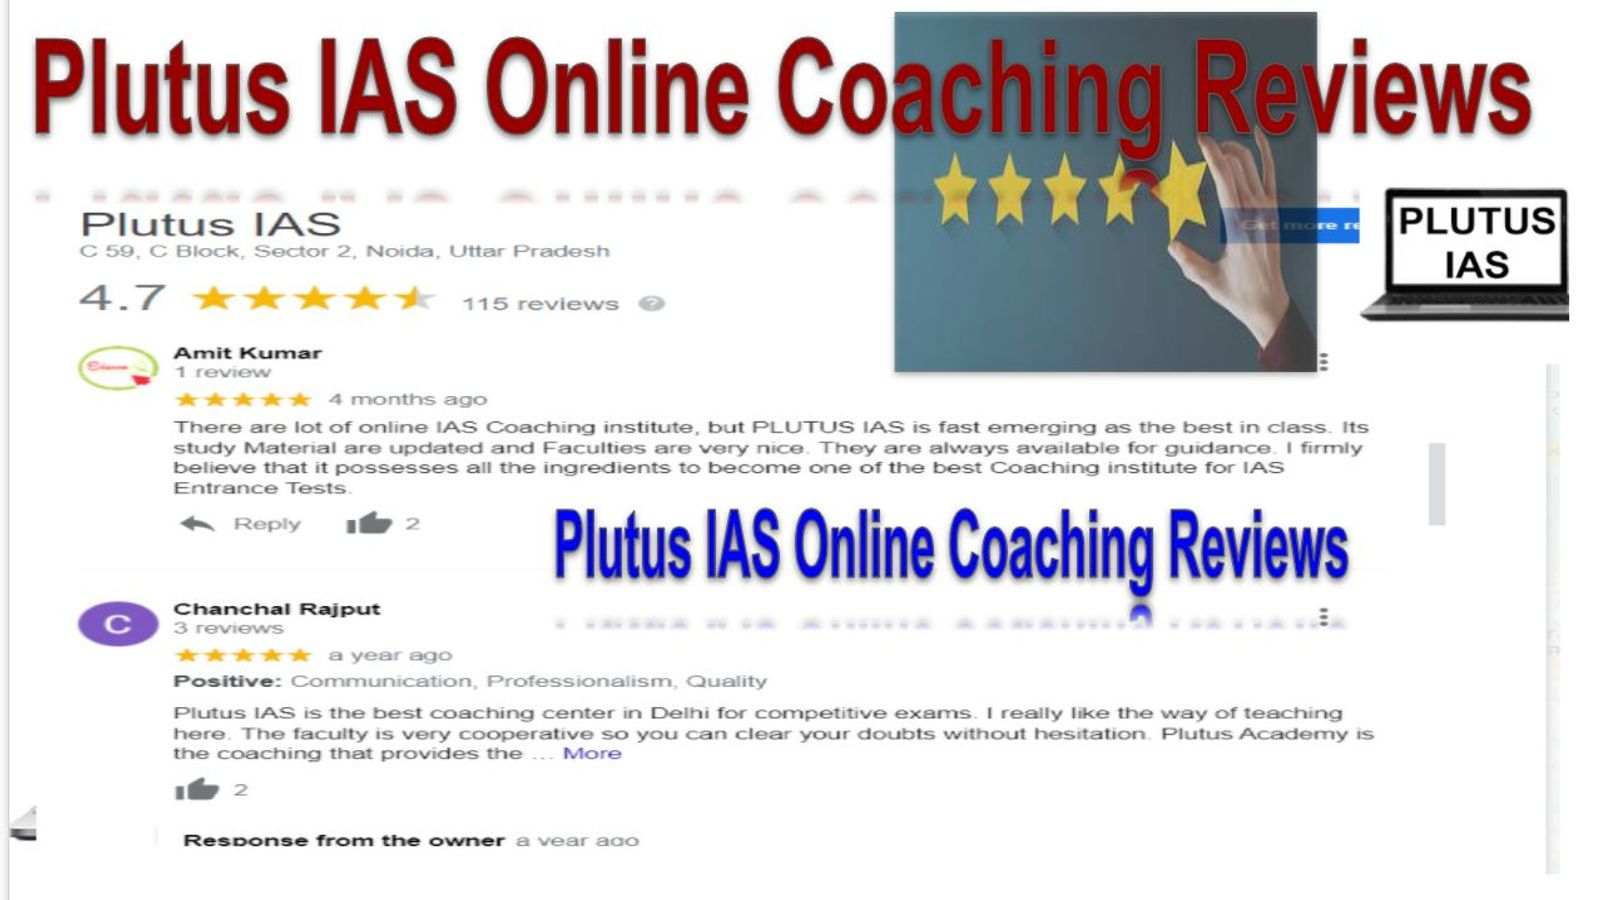 Plutus IAS Online Coaching Reviews